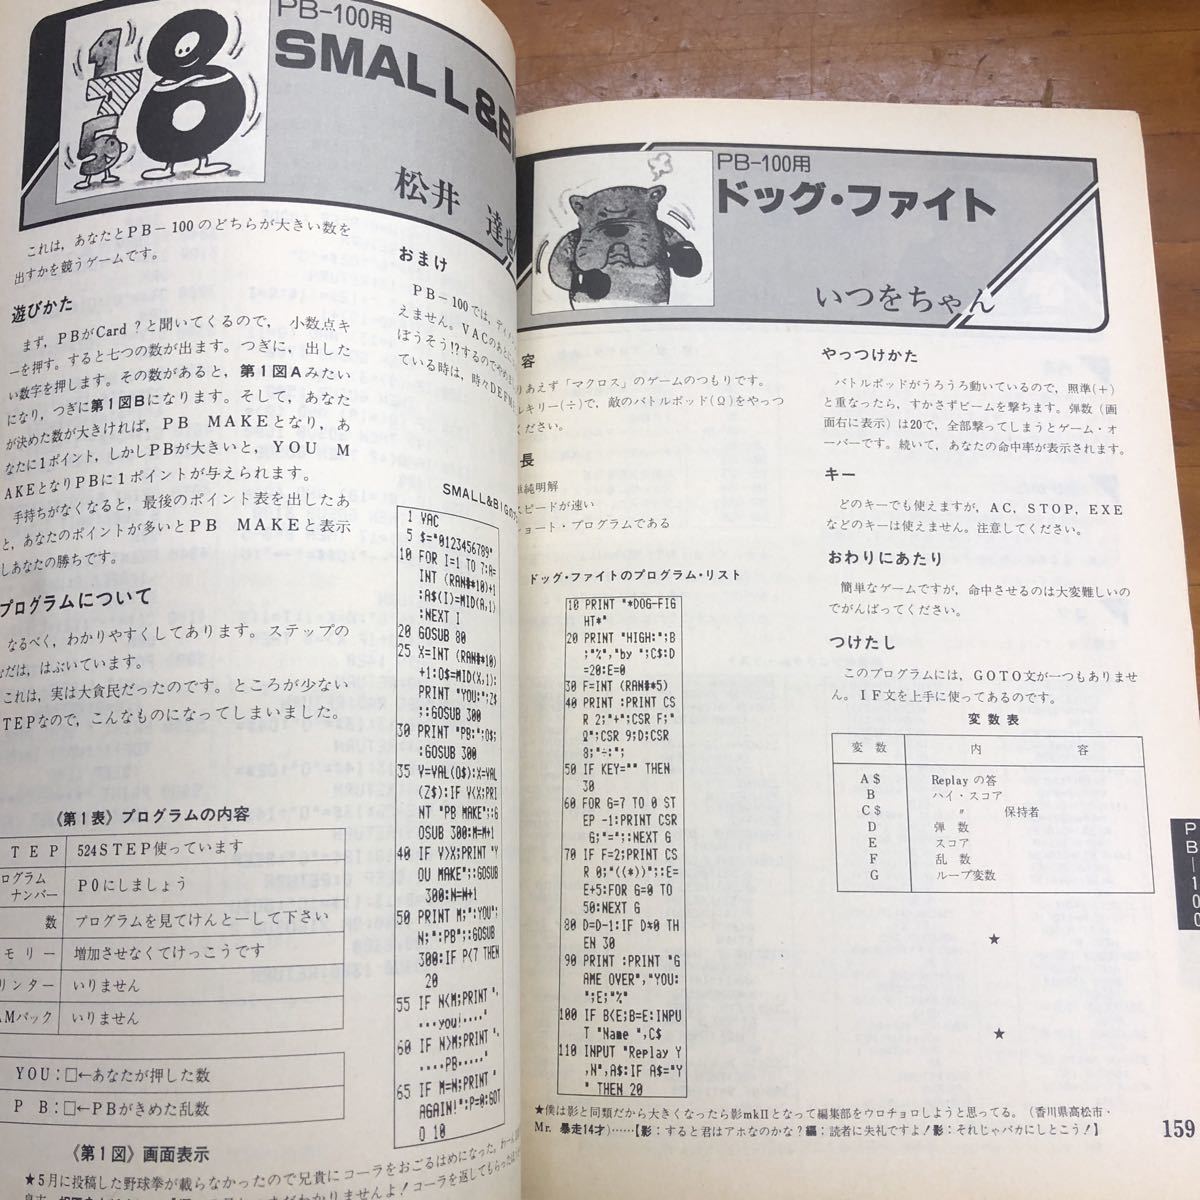  microcomputer BASIC журнал 1983 Showa 58 год 8 месяц номер радиоволны газета фирма 